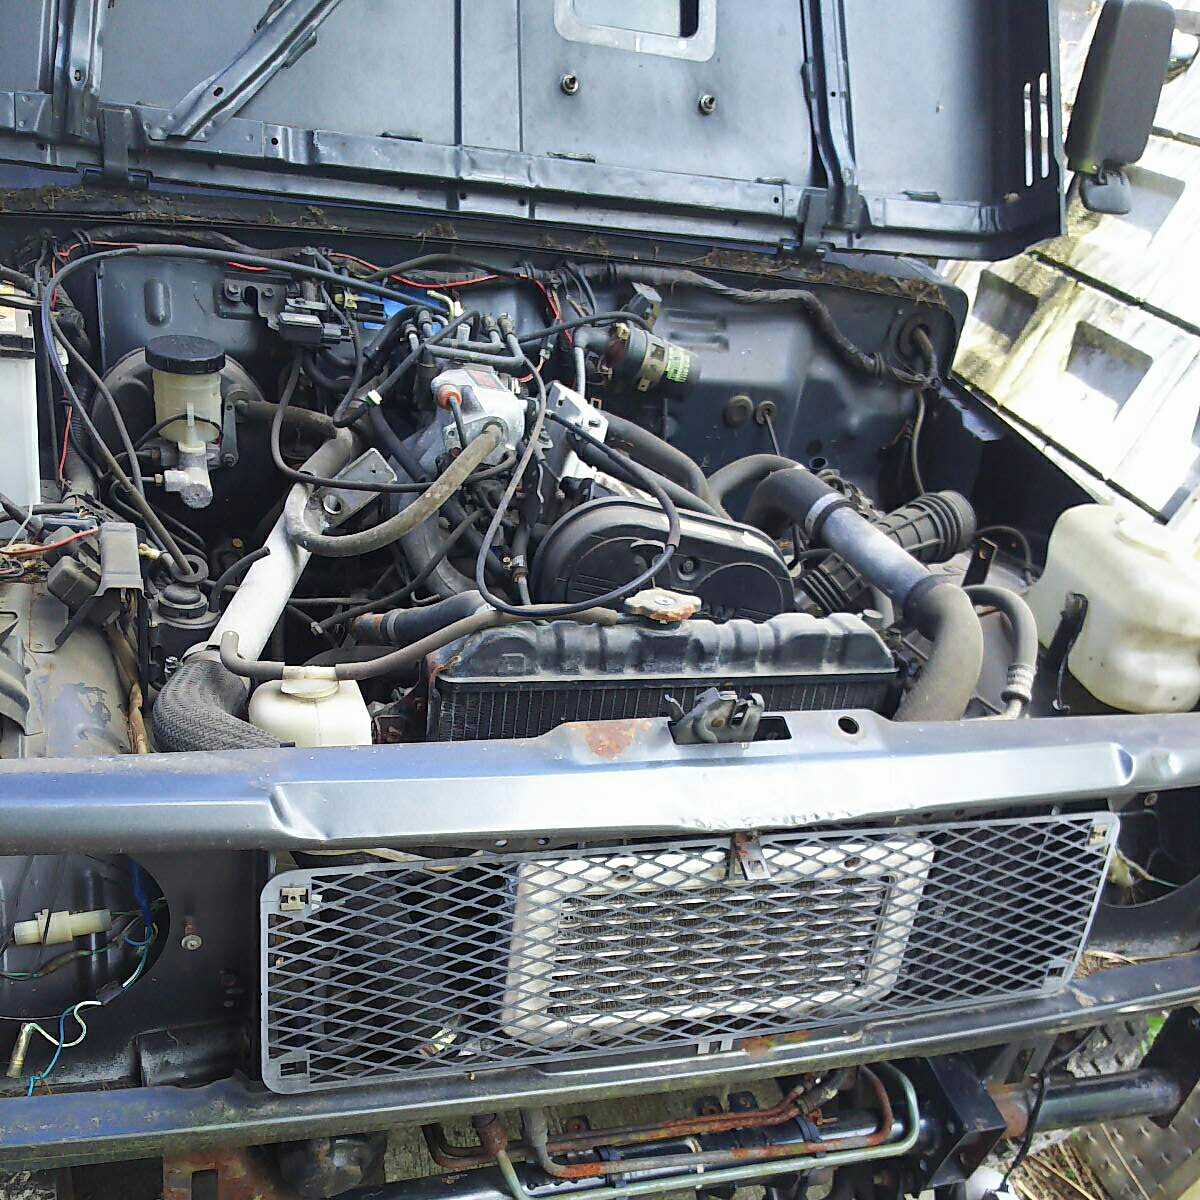  part removing Suzuki Jimny 660cc immovable car Works engine installing 